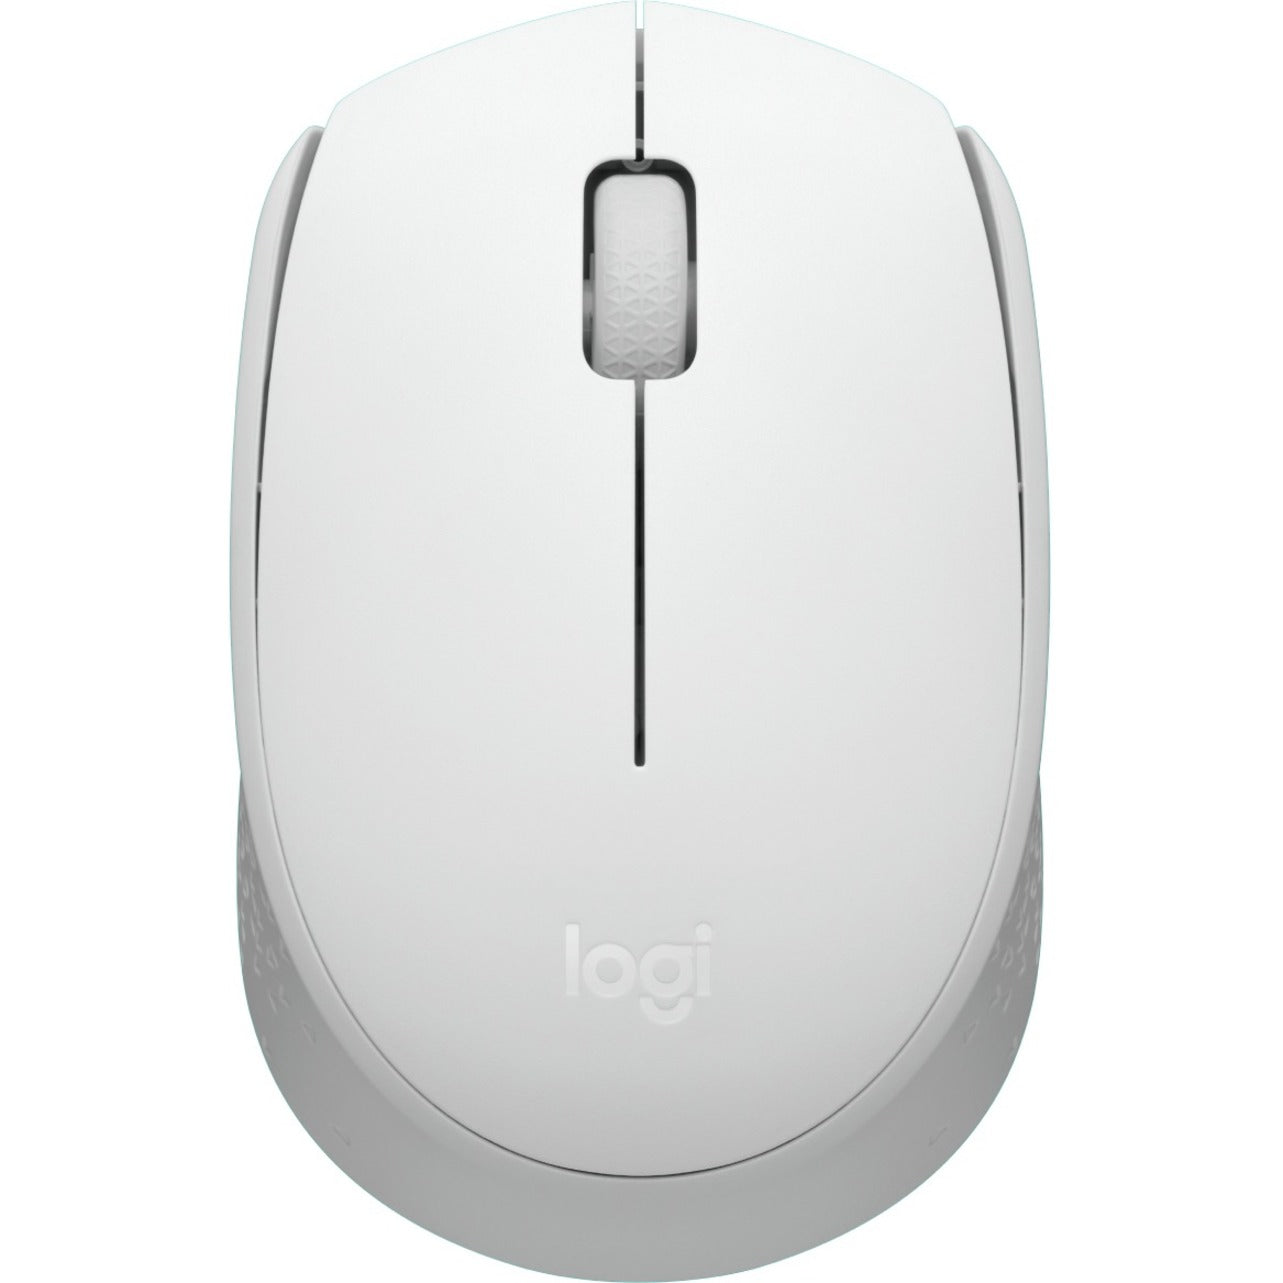 Logitech 910-006864 M170 Mouse, Wireless 2.4 GHz Optical Radio Frequency, USB Receiver, 1 Year Warranty